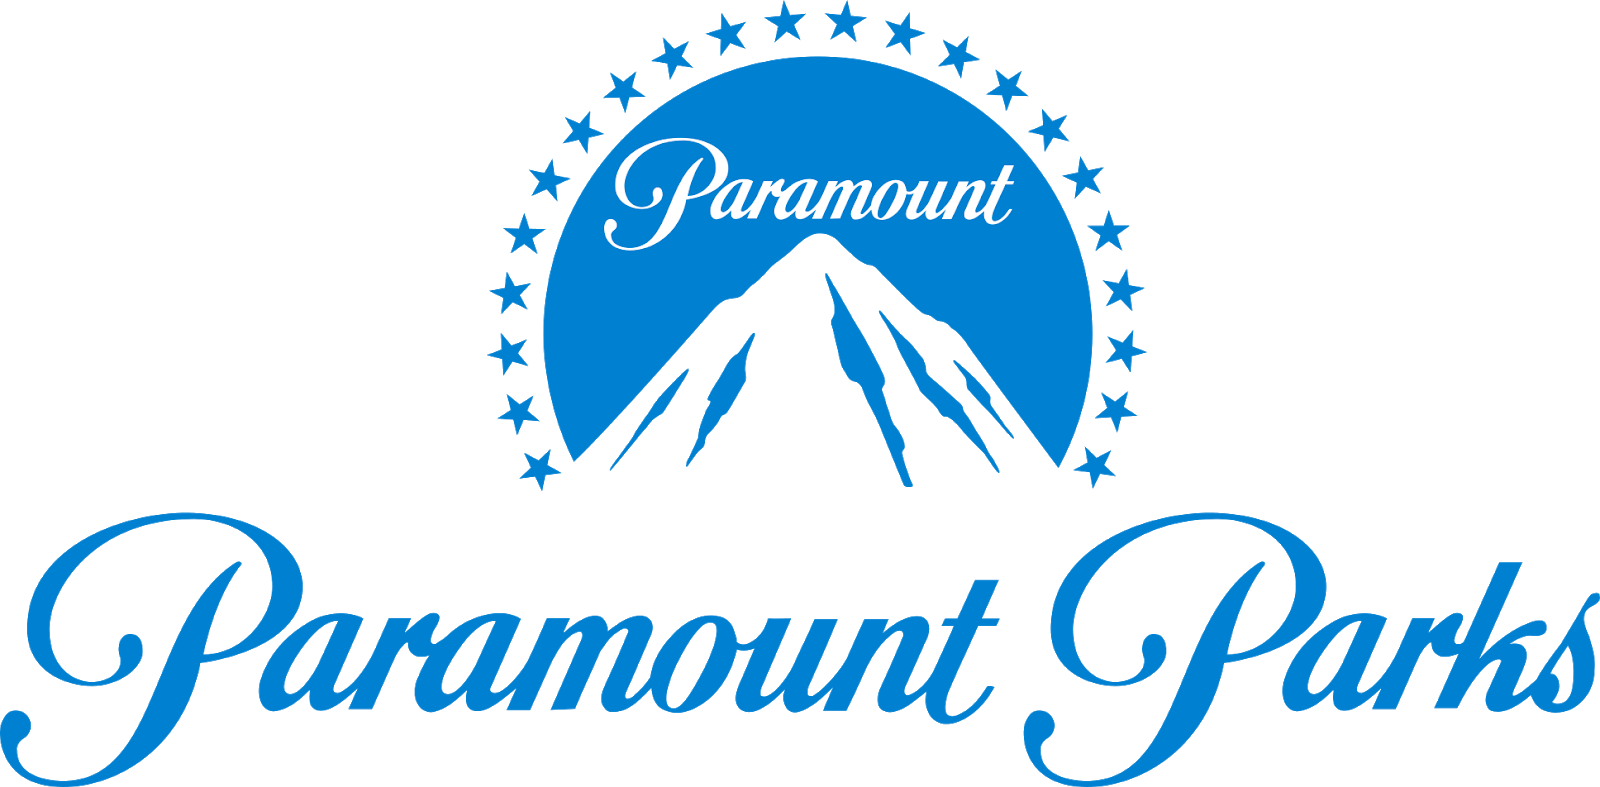 Paramount. Paramount picture парк развлечений. Тематический парк "Paramount pictures" Бали. Paramount группа. Парк парамаунт